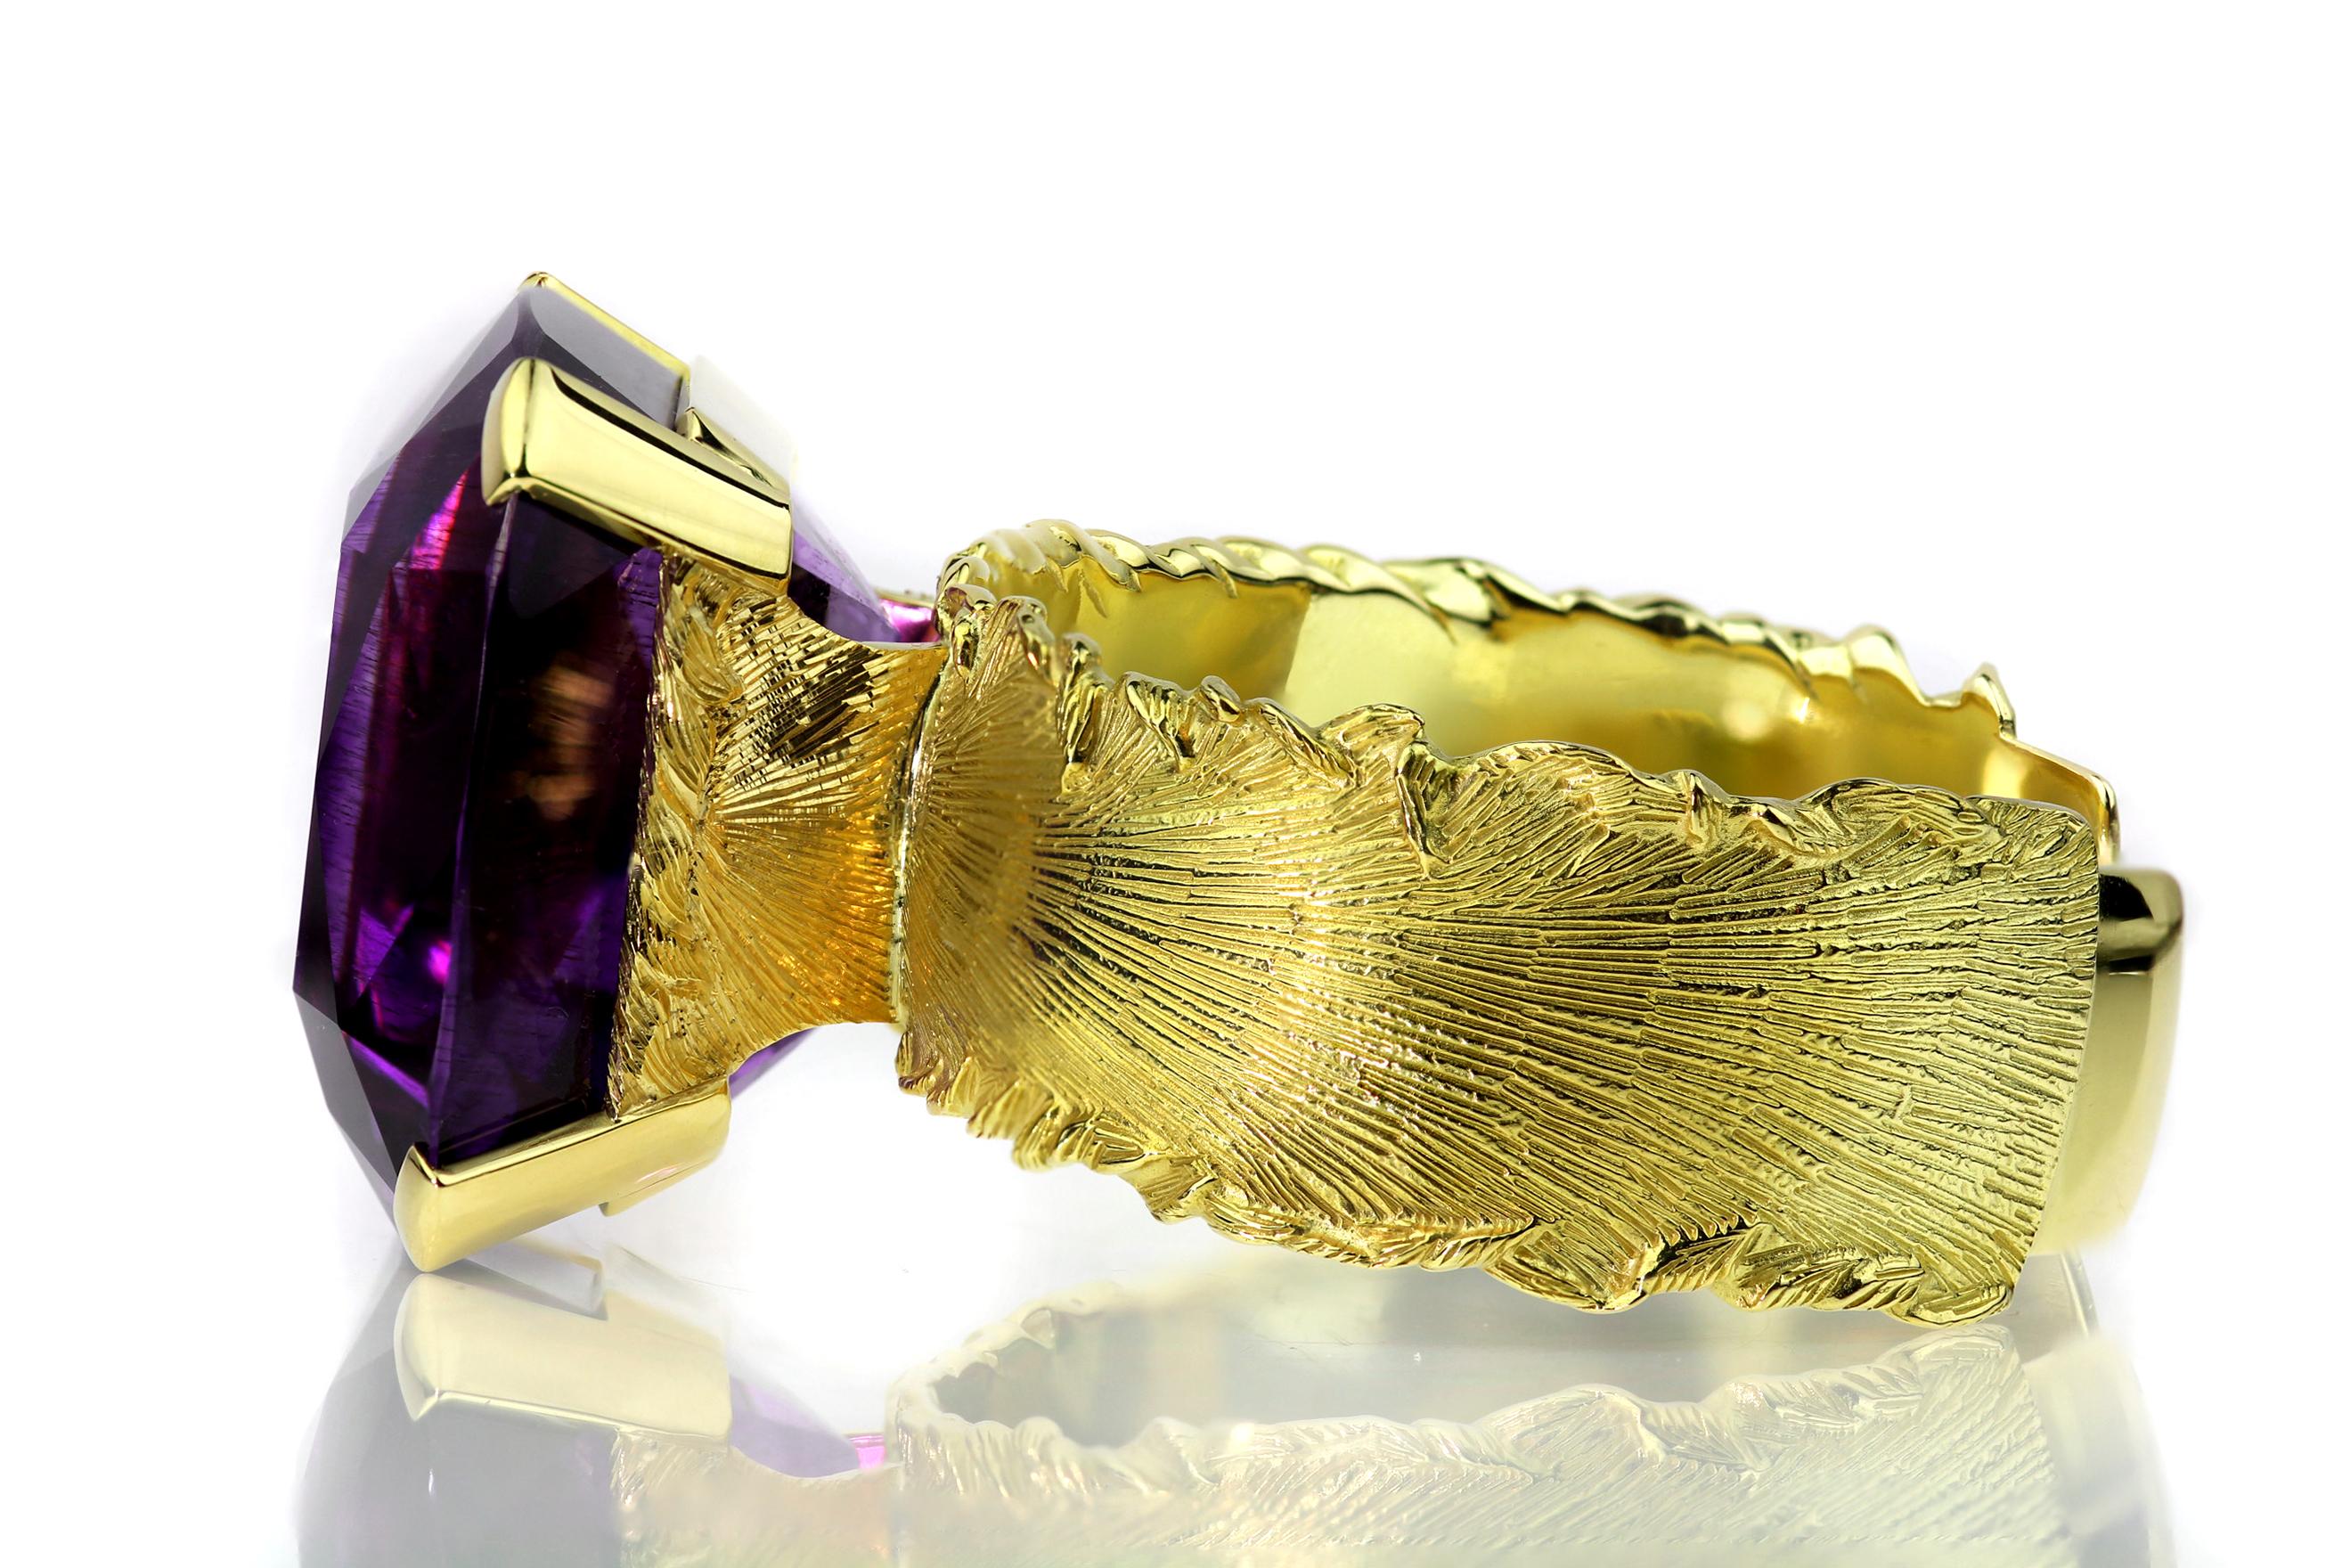 Modern Simon Benney, Royal Jeweler, 18 K Gold Cuff Bangle with Big Amethyst